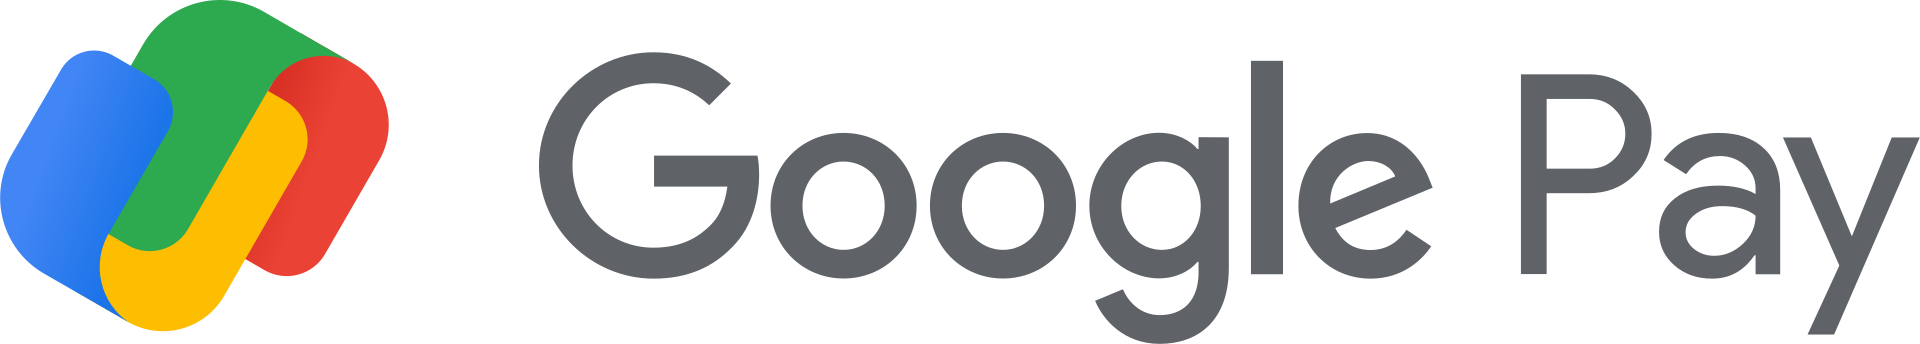 Google_Pay_Logo__2020_.svg.png